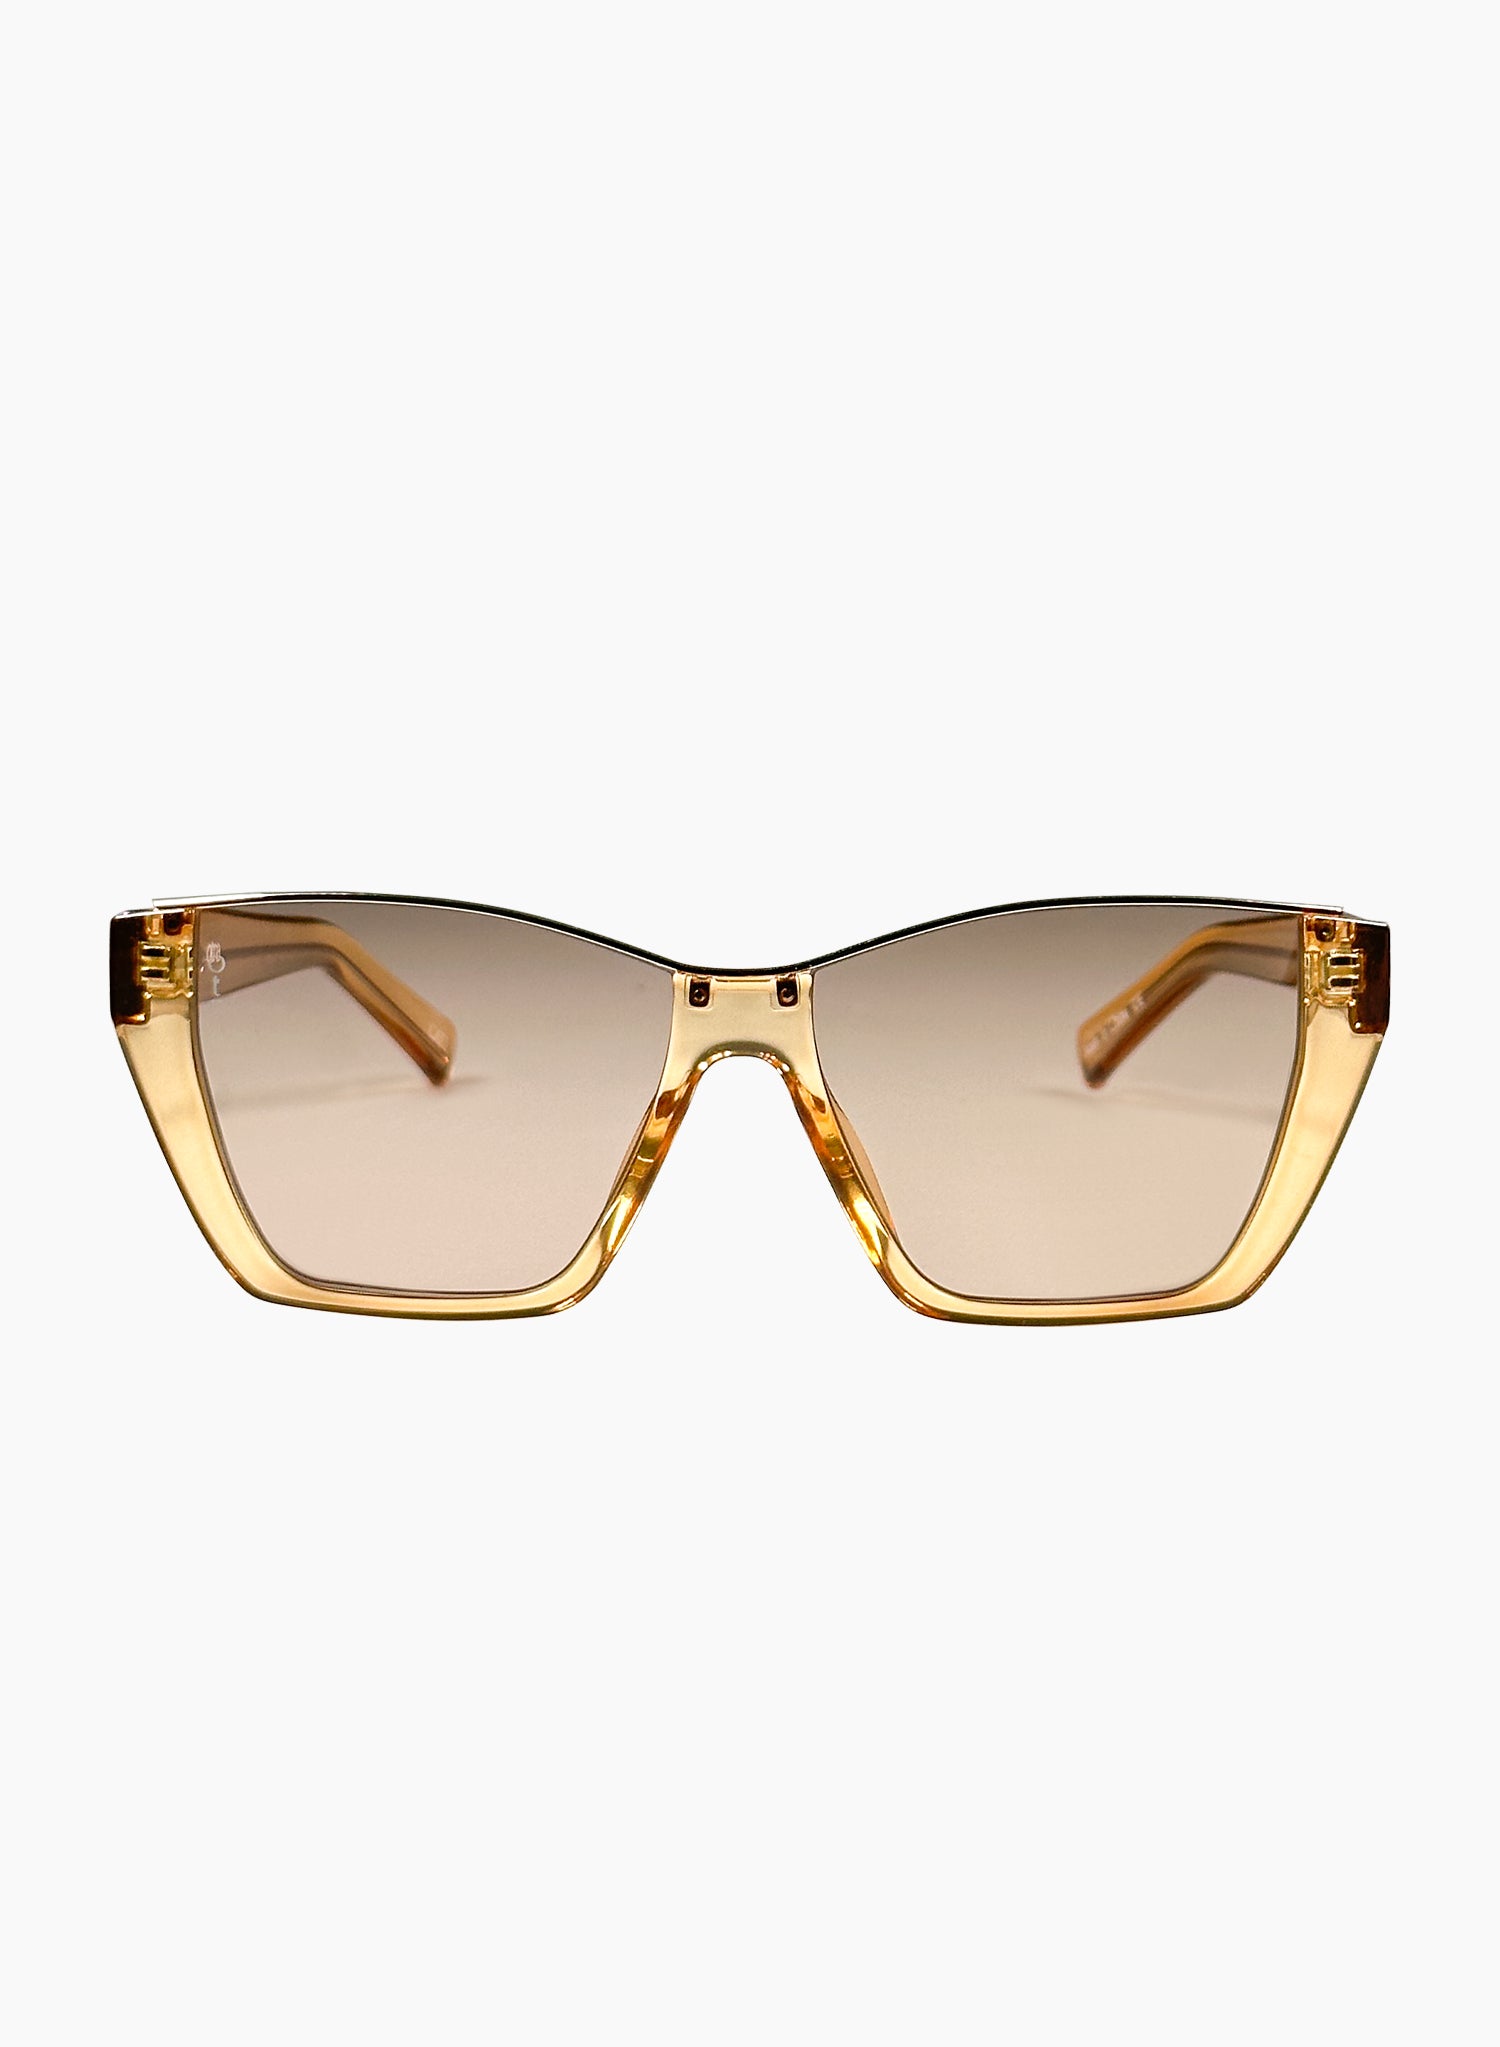 Belle oversized cateye sunglasses in gold